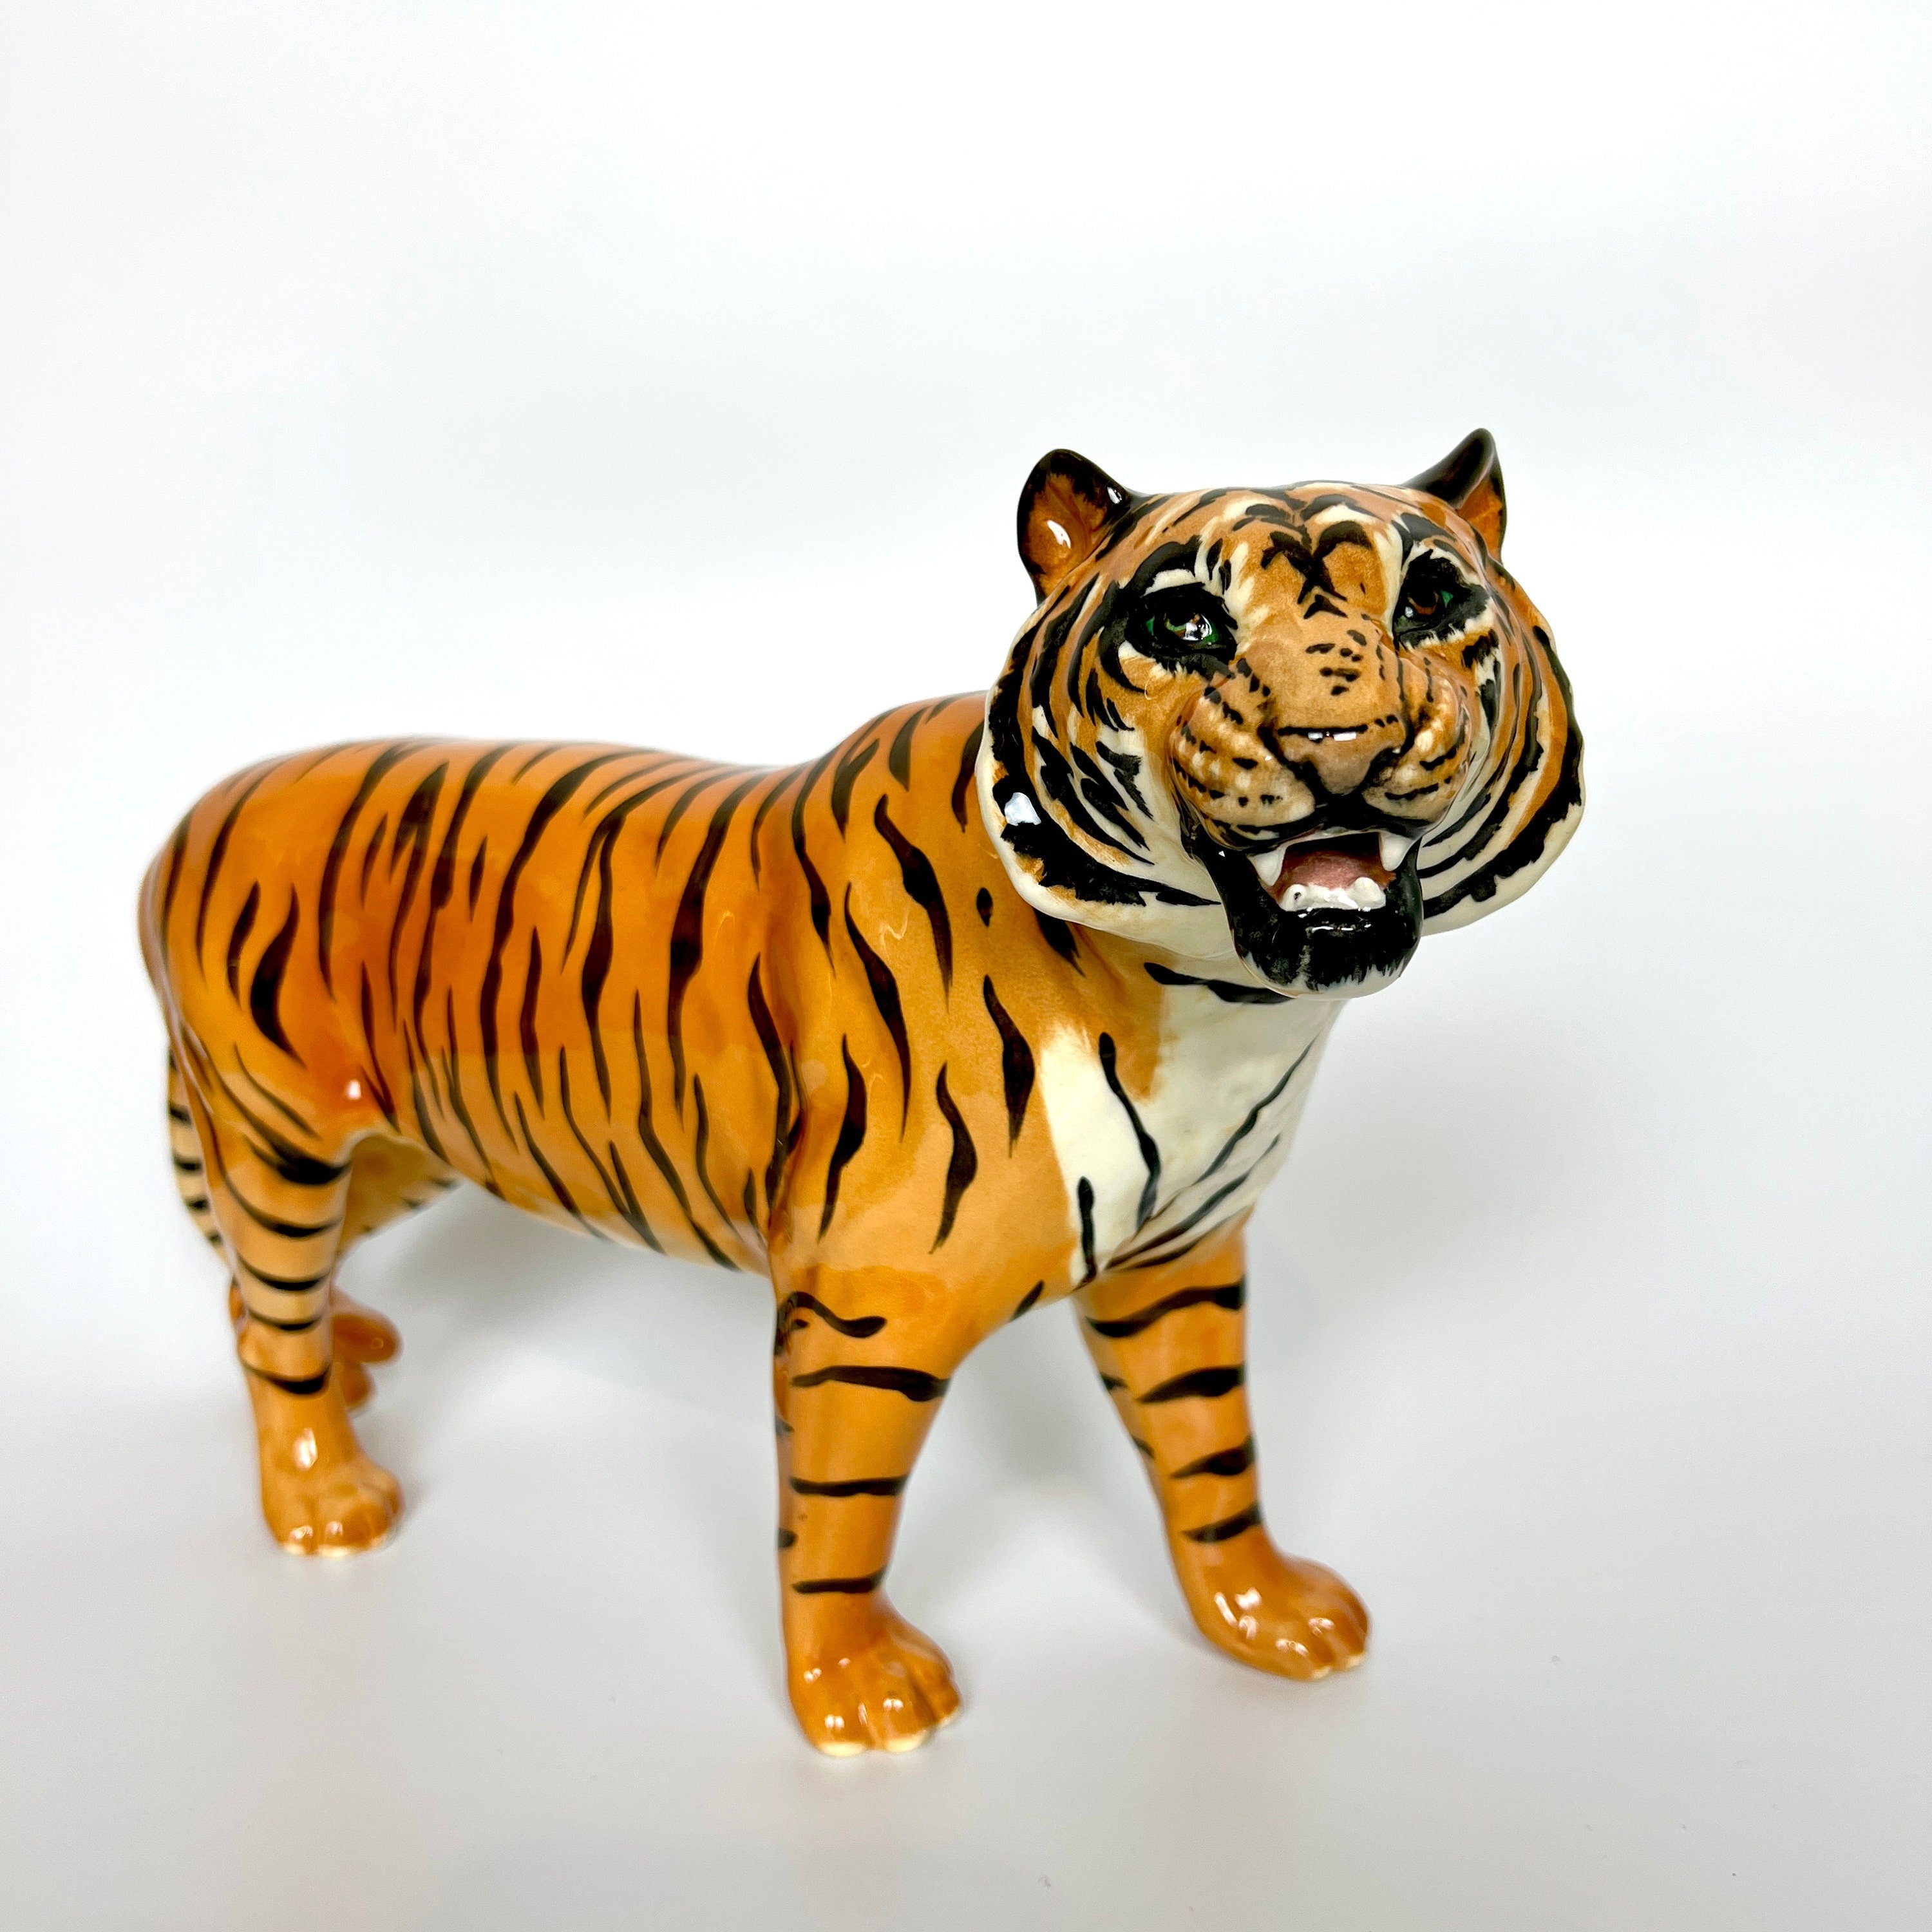 Large Vintage Ceramic Tiger Figurines